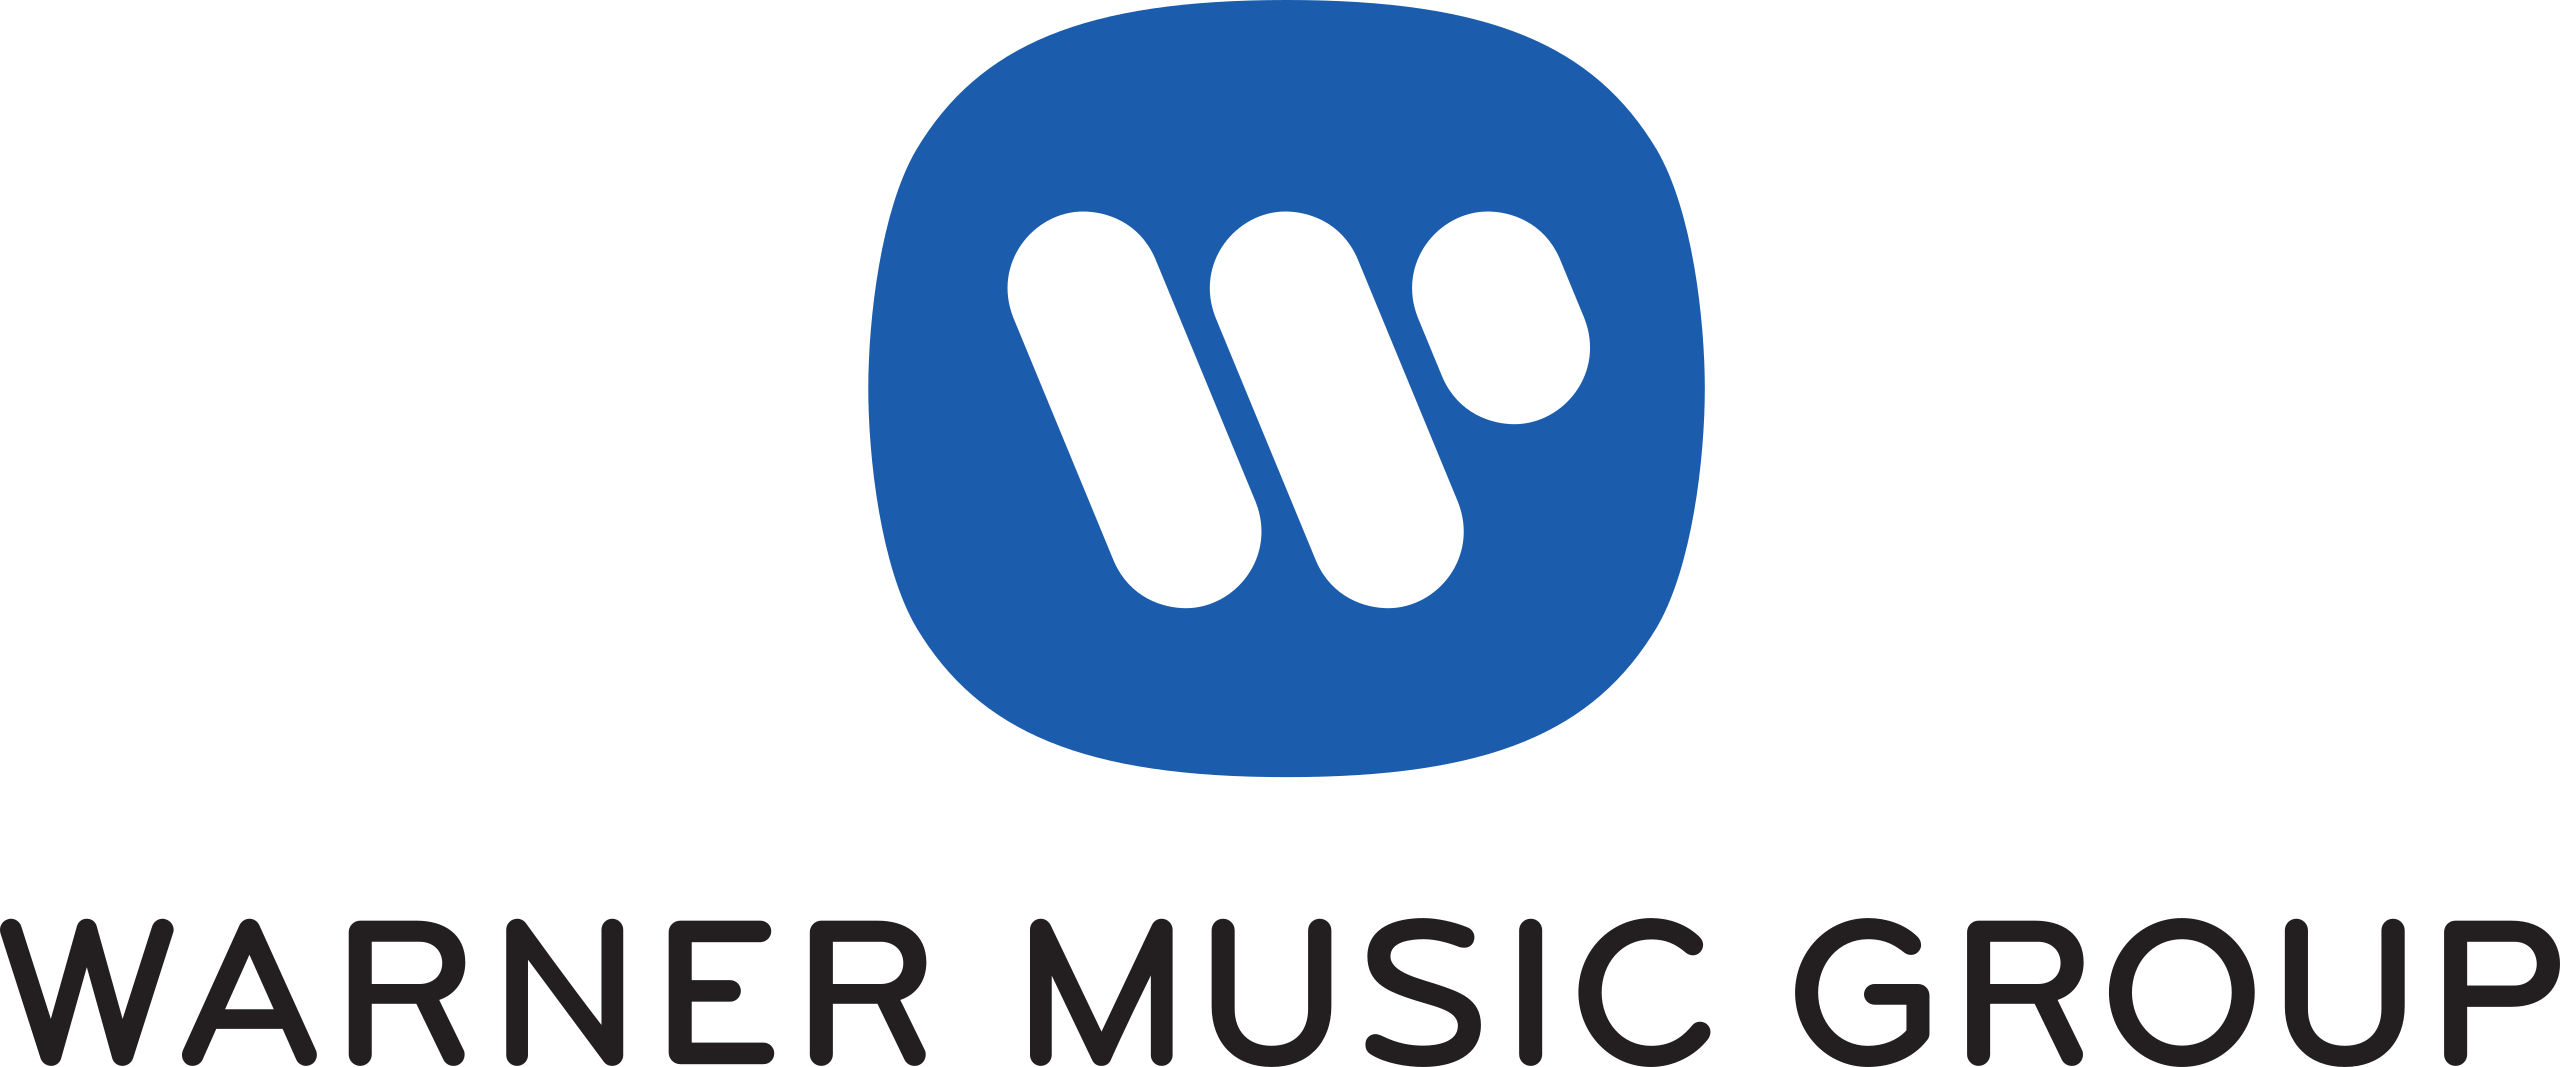 Warner Music Group Corp